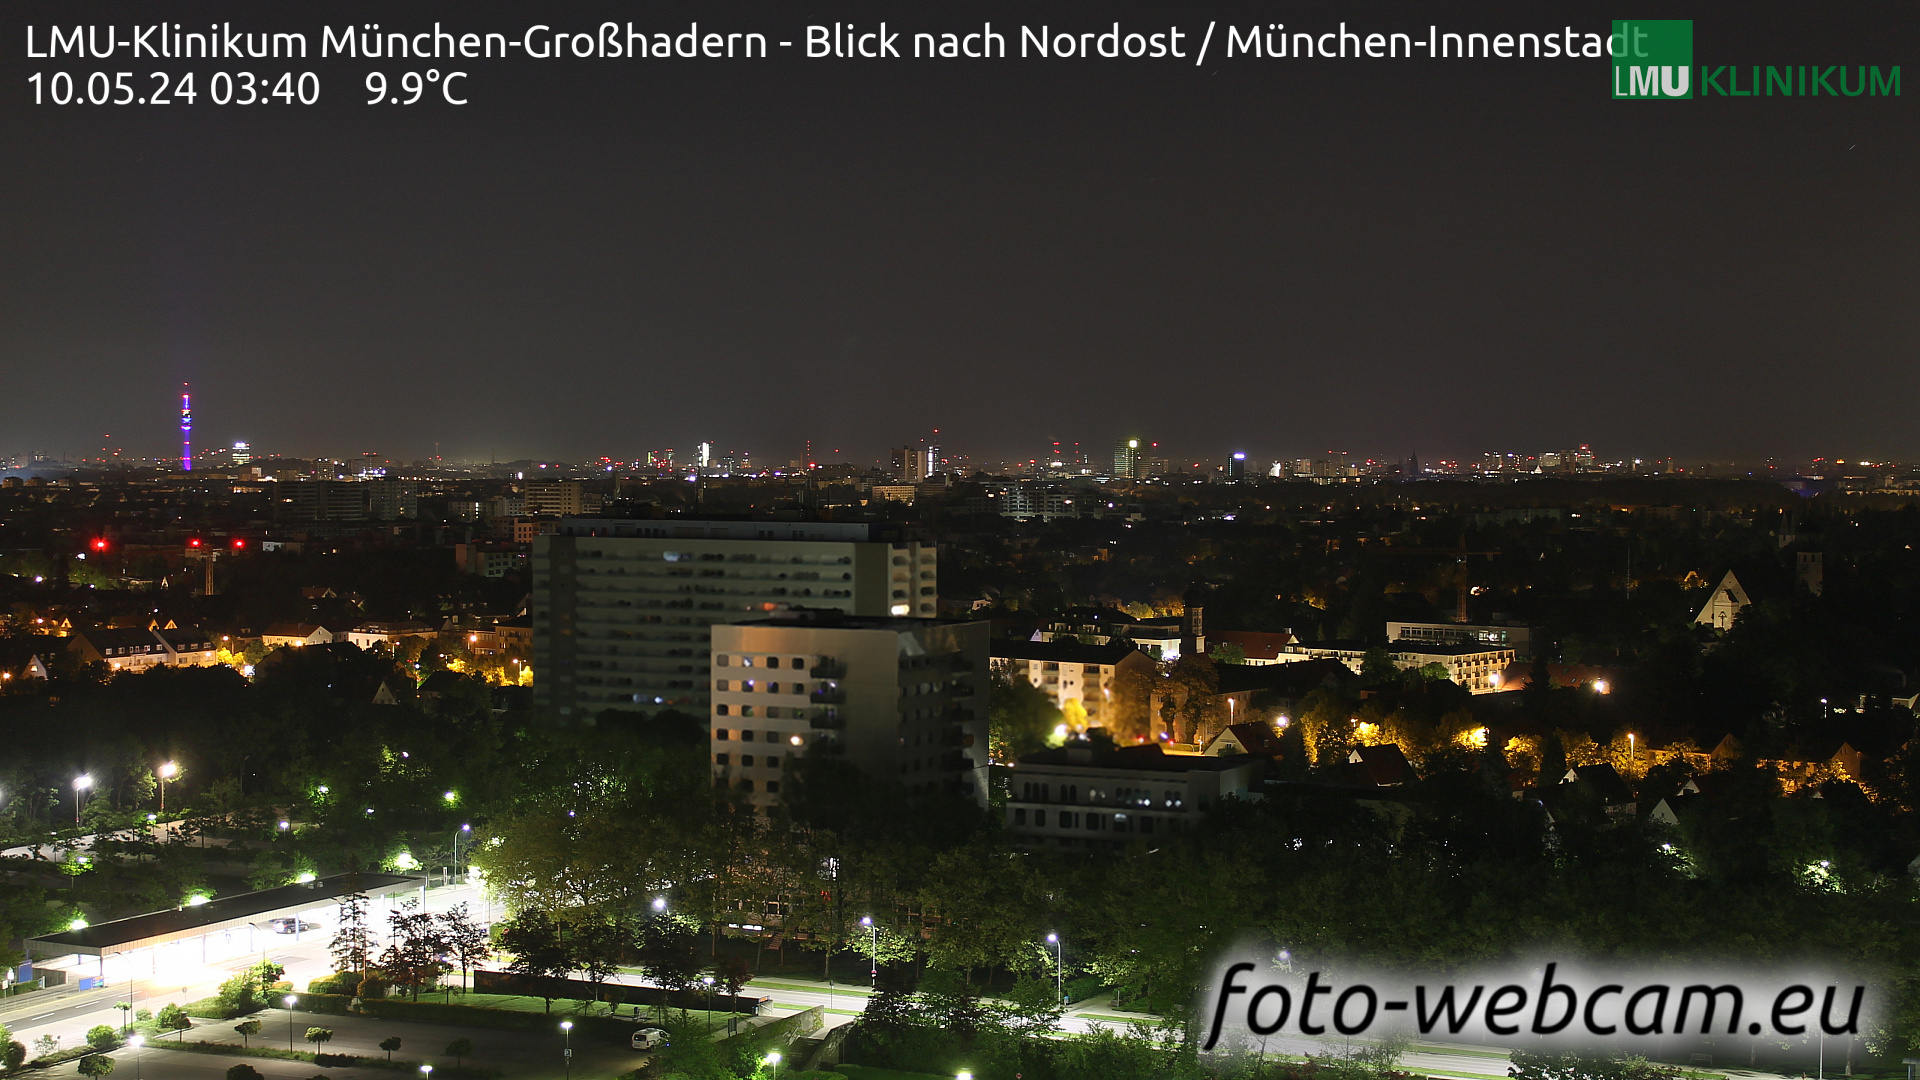 Munich Dom. 03:46